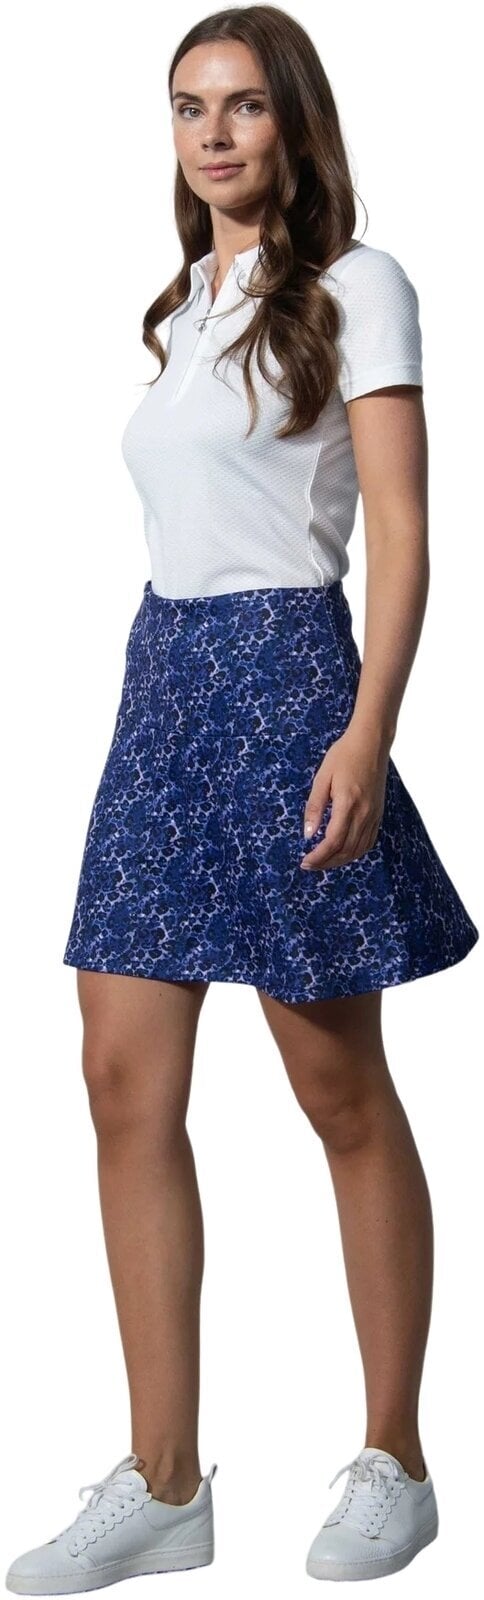 Skirt / Dress Daily Sports Andria Skort 45 cm Art Leo XL